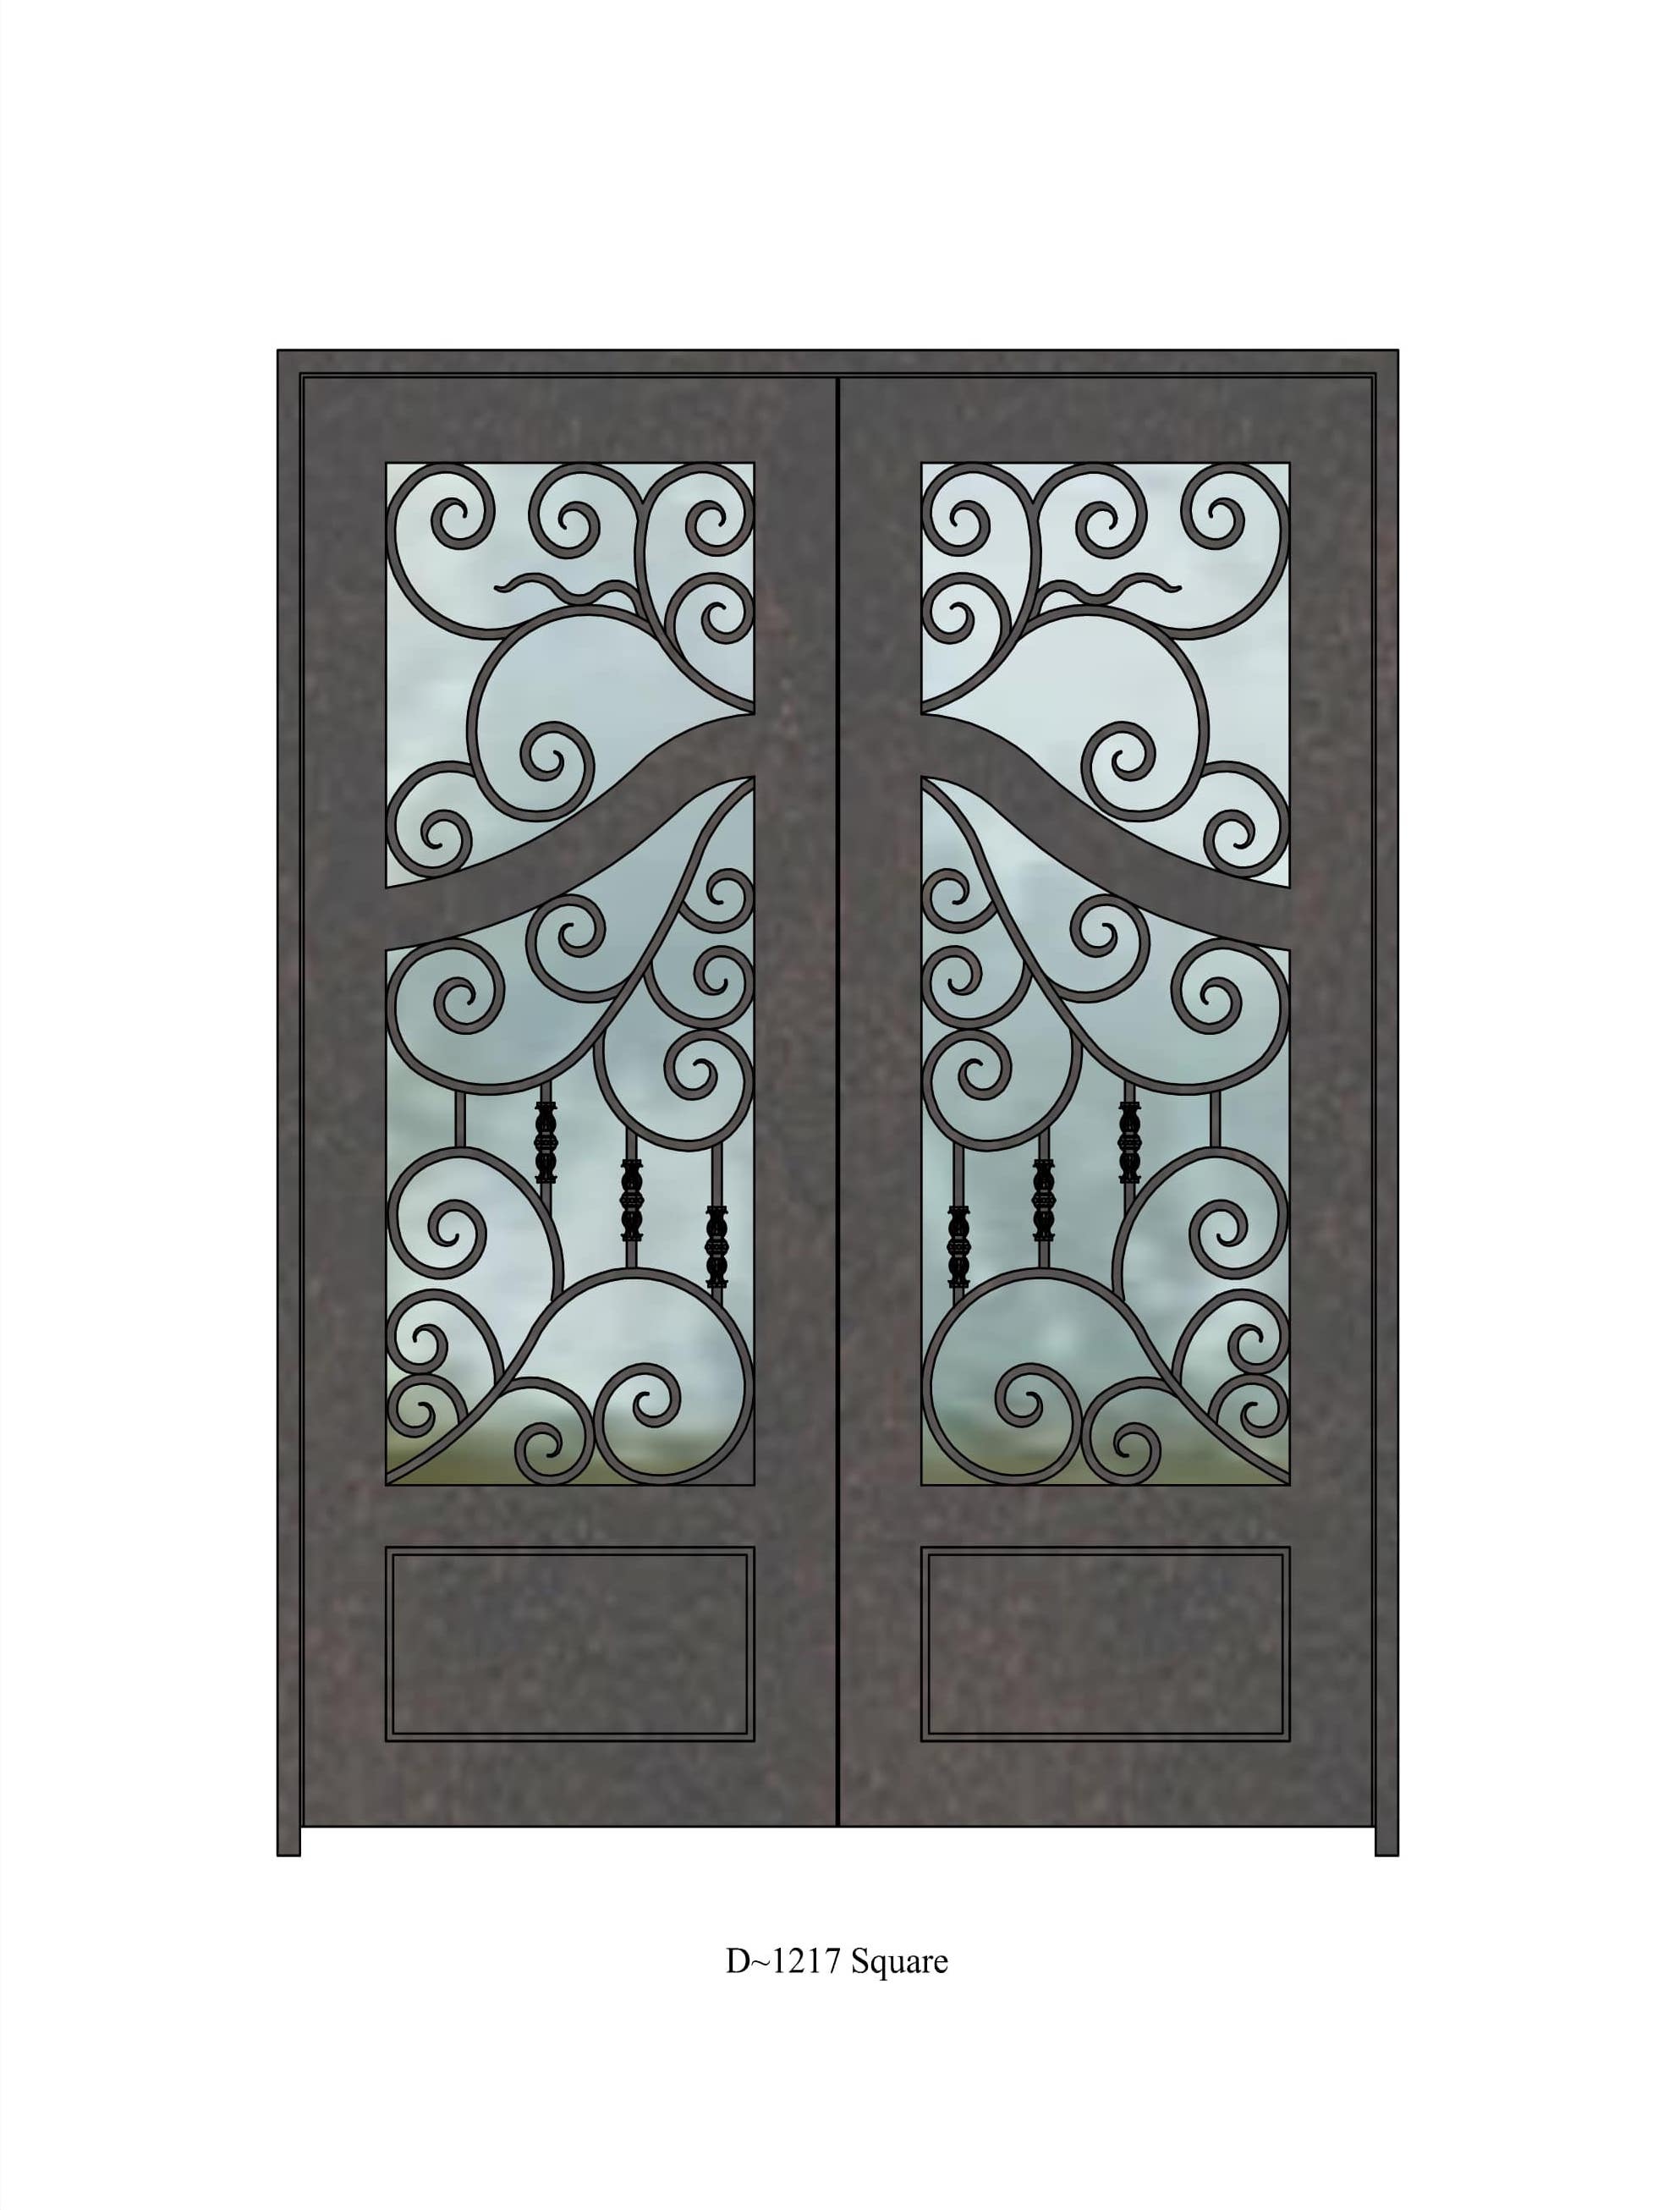 Square top door with ironwork pattern over window